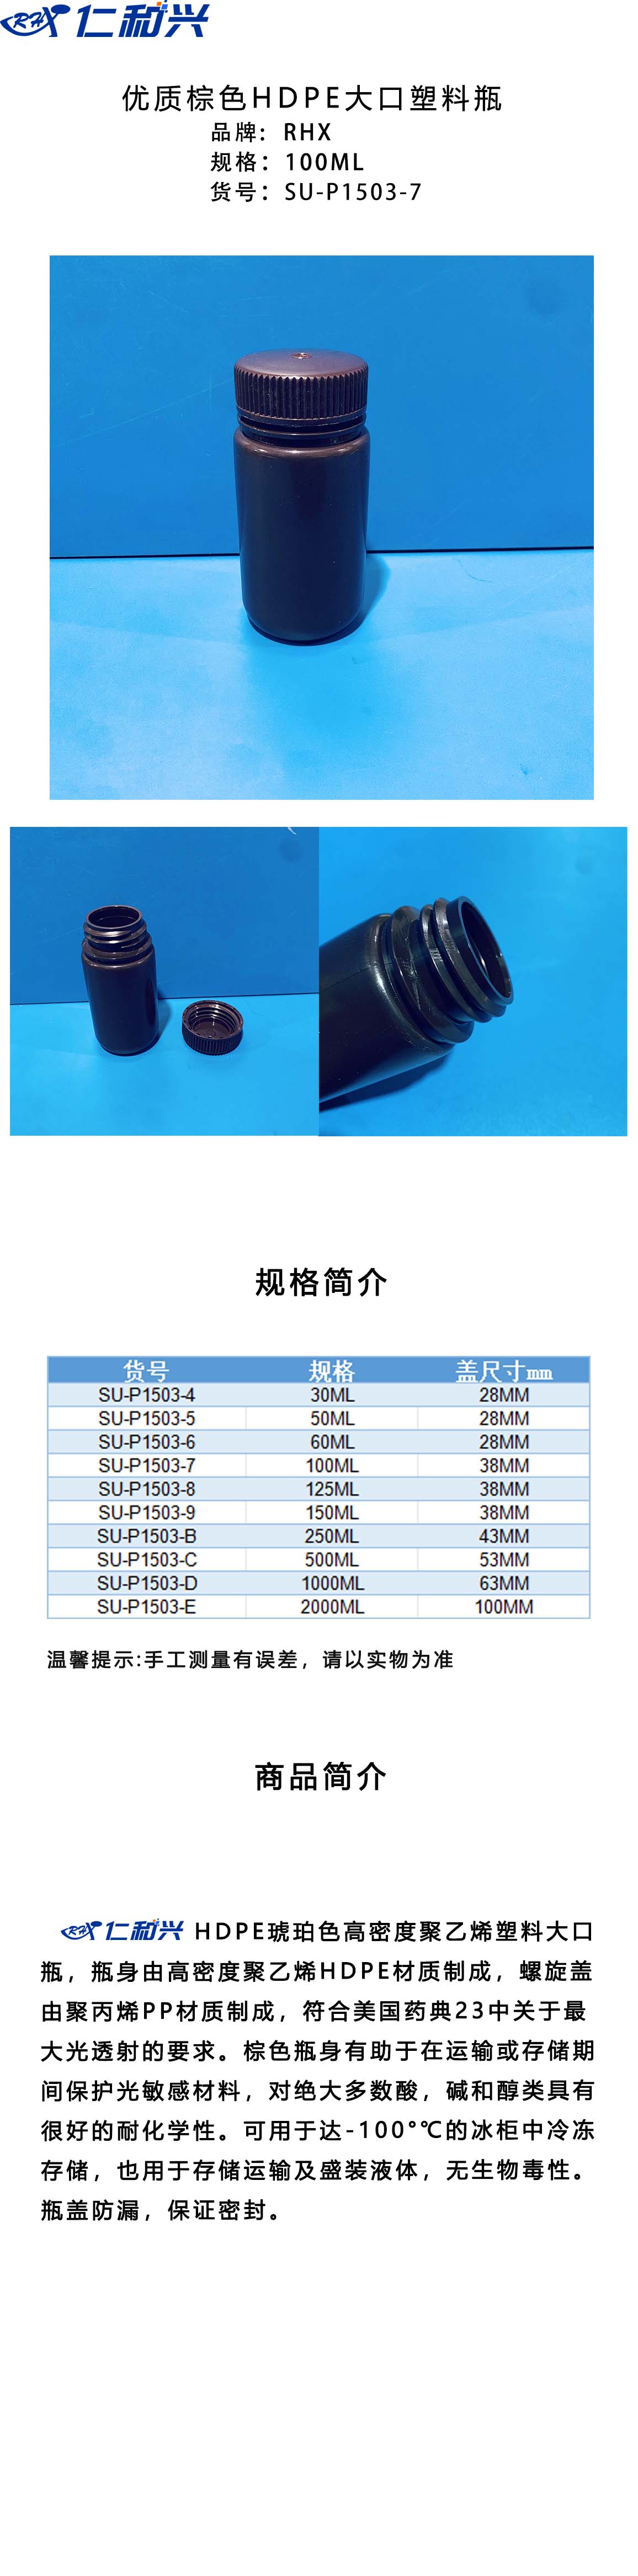 SU-P1503-7 棕色HDPE 大口塑料瓶 长图模板.jpg